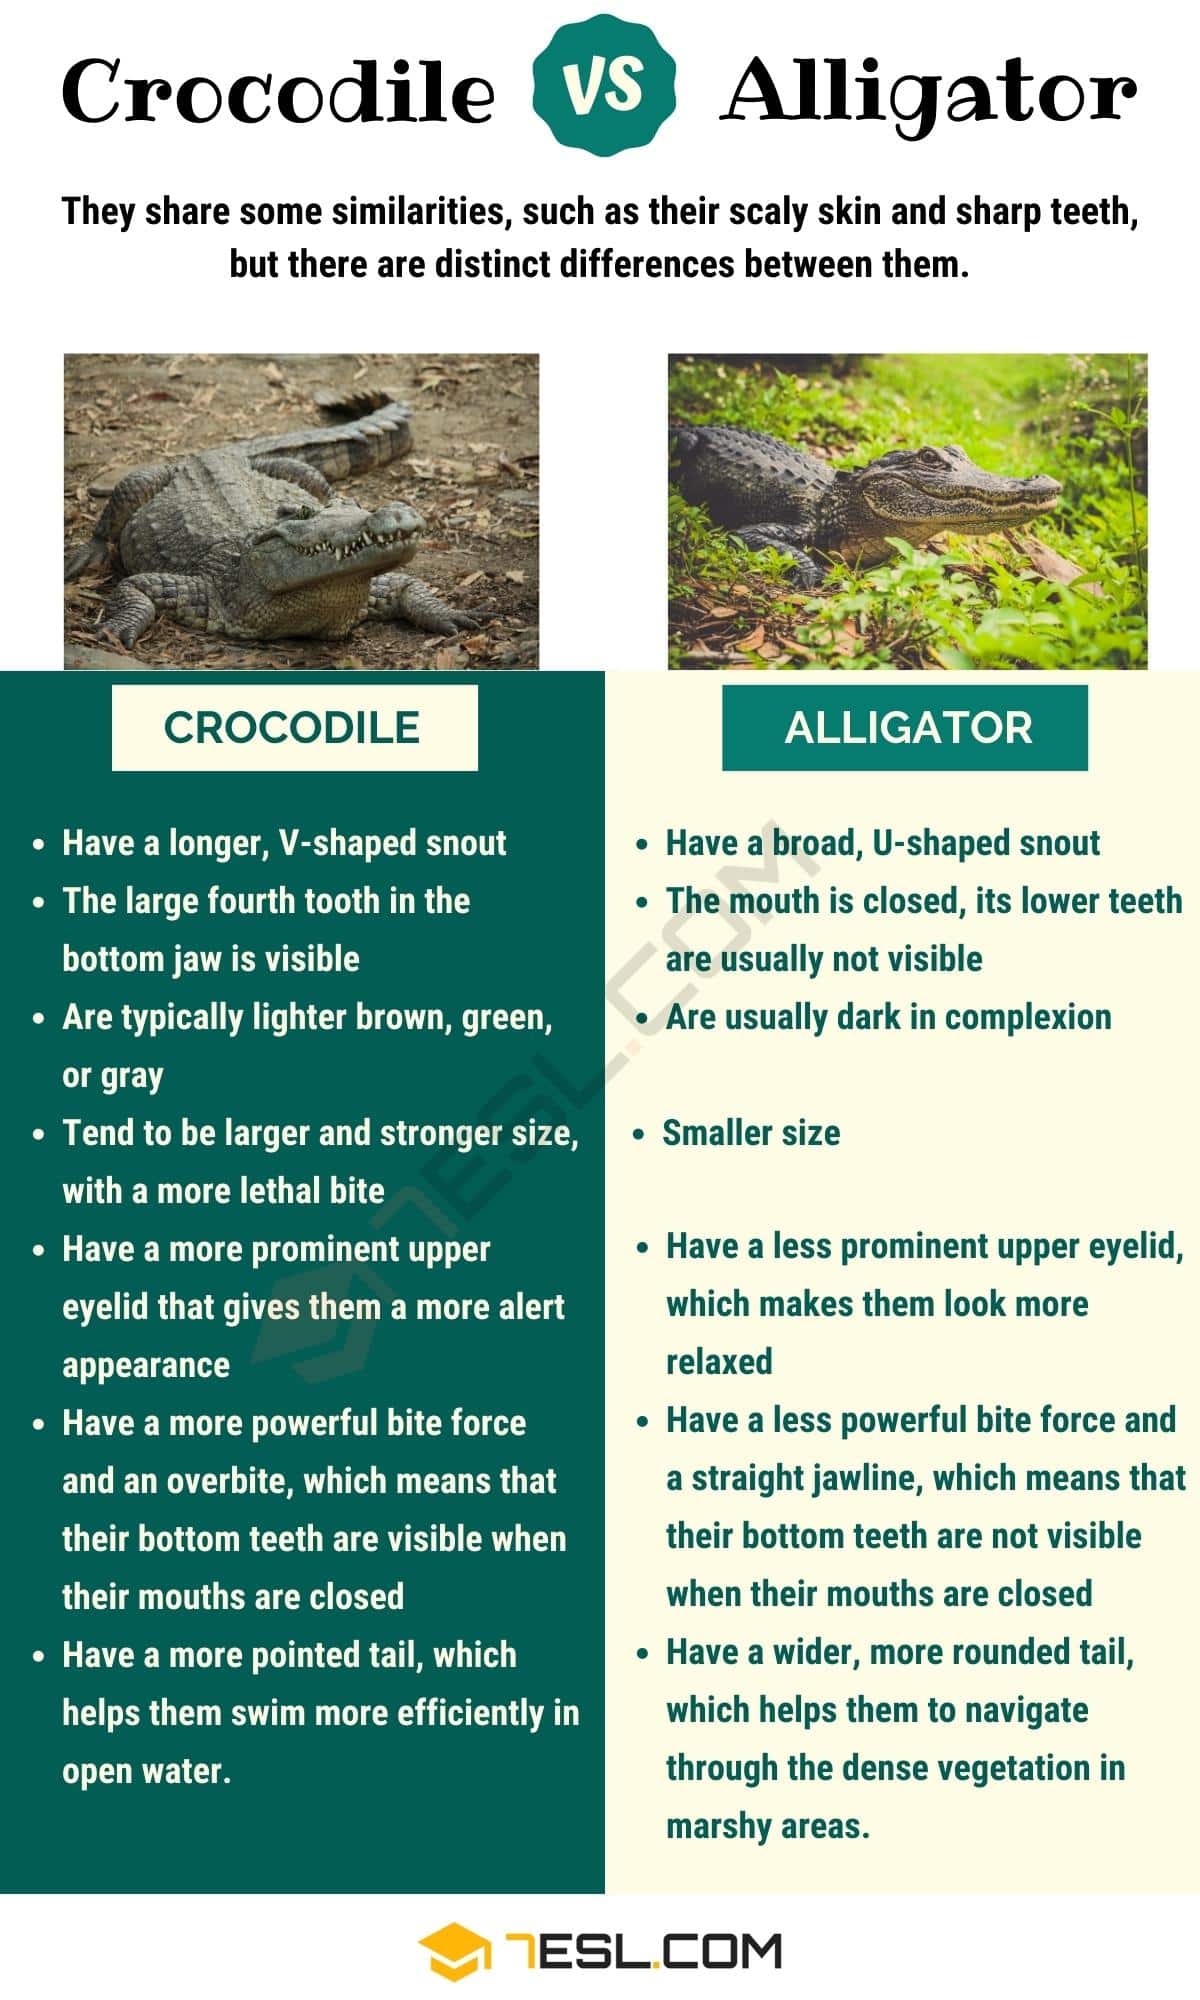 Crocodile vs. Alligator